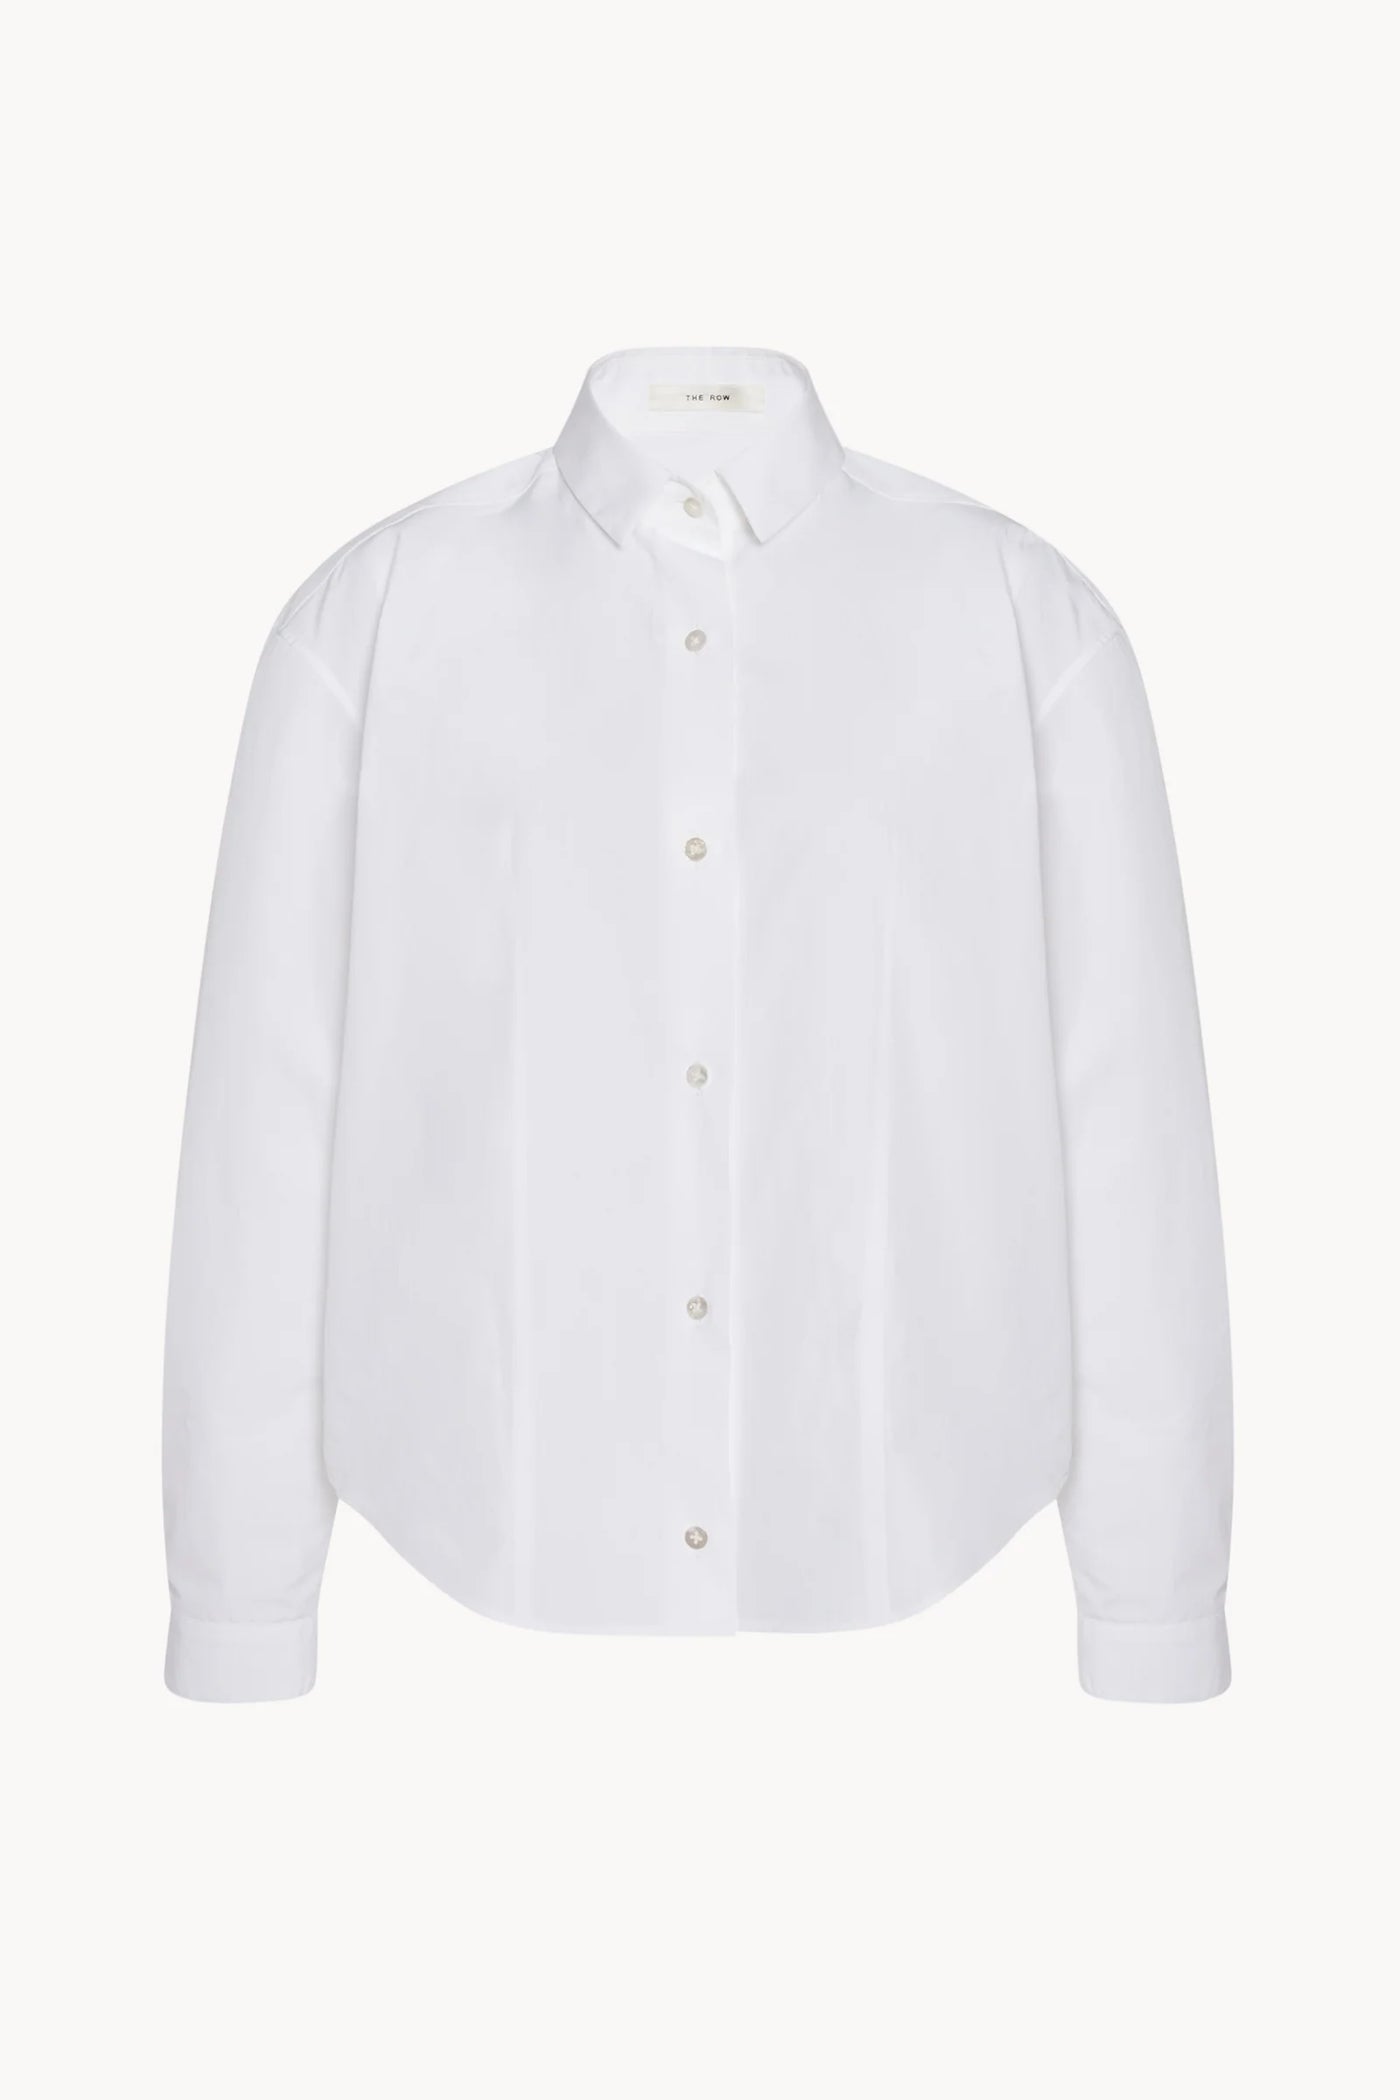 the-row-baltica-shirt-white-amarees